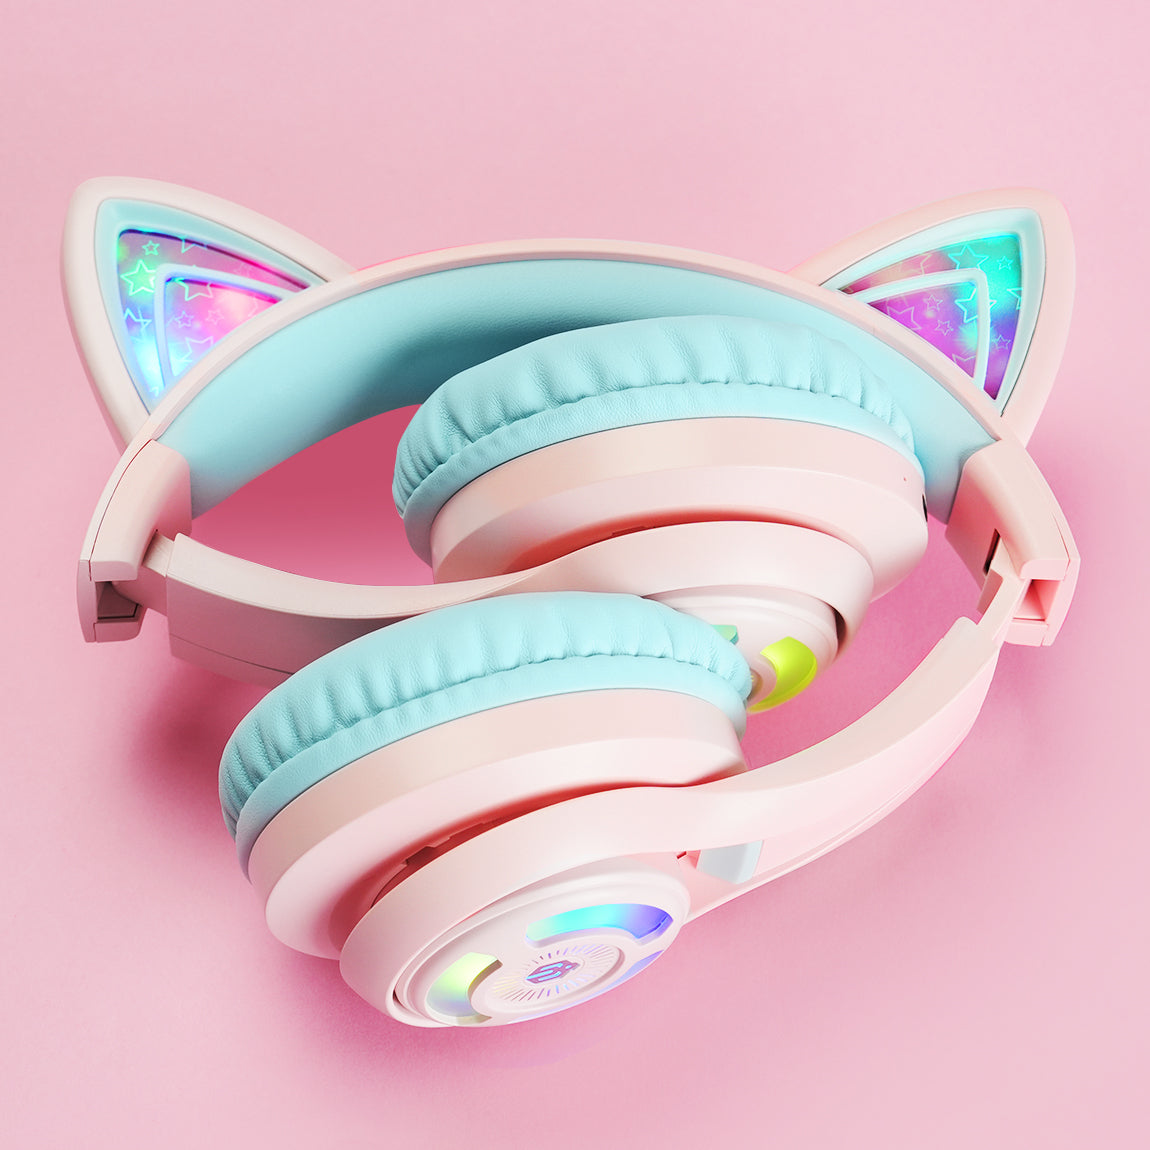 iClever Cat Ear Bluetooth Headphones BTH13 (UK)